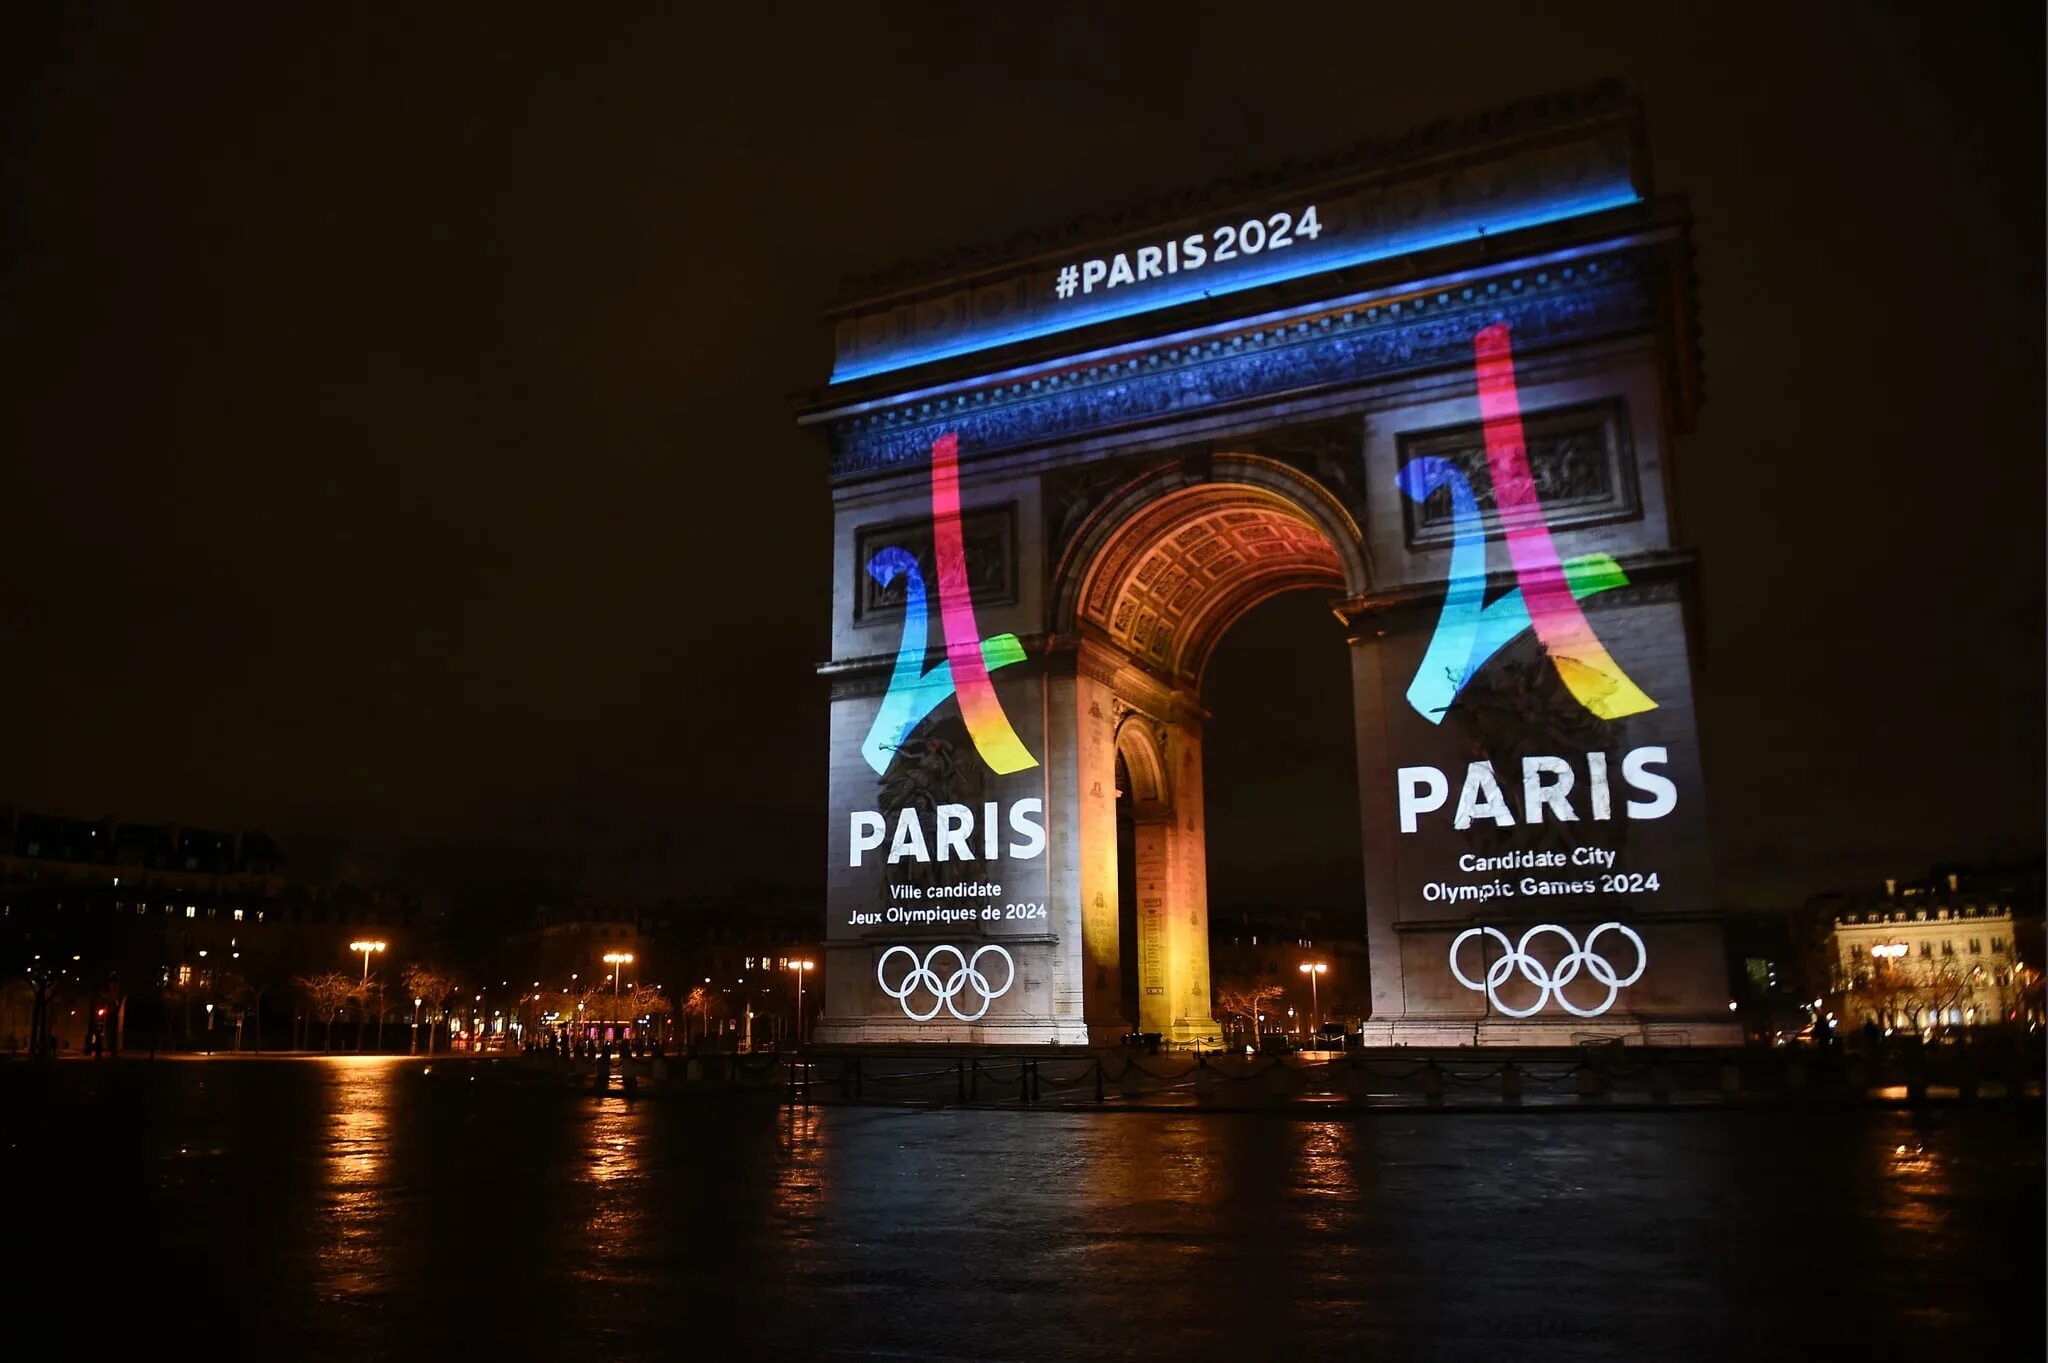 The year is 2024. Олимпийские игры в Париже 2024. Олимпийских игр–2024 в Париже лого. Париж 2024 логотип.